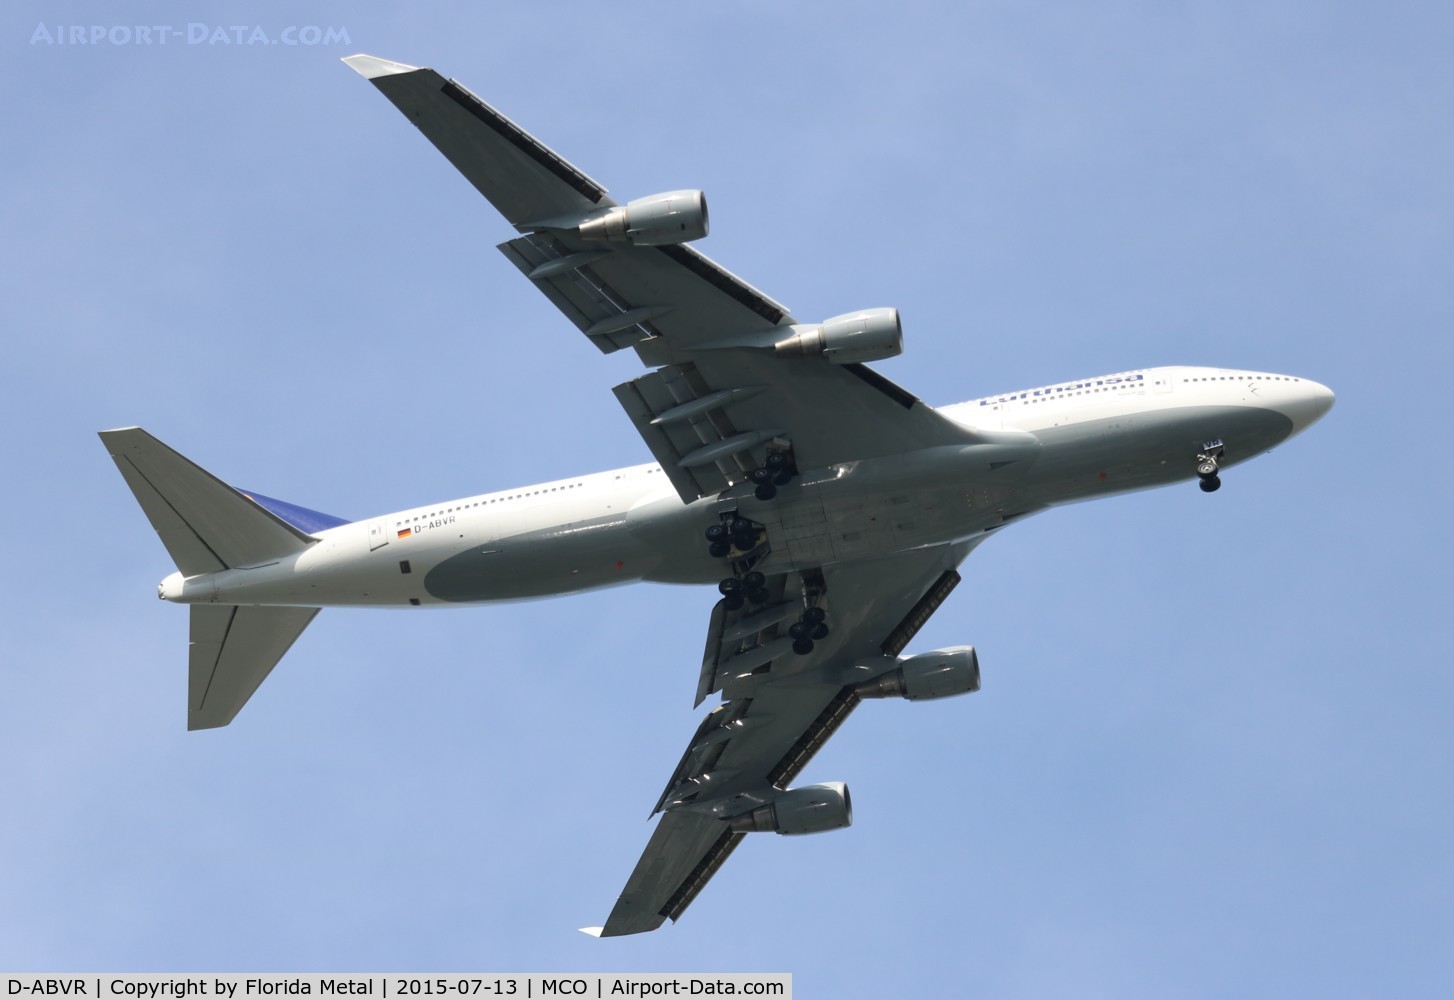 D-ABVR, 1997 Boeing 747-430 C/N 28285, Lufthansa